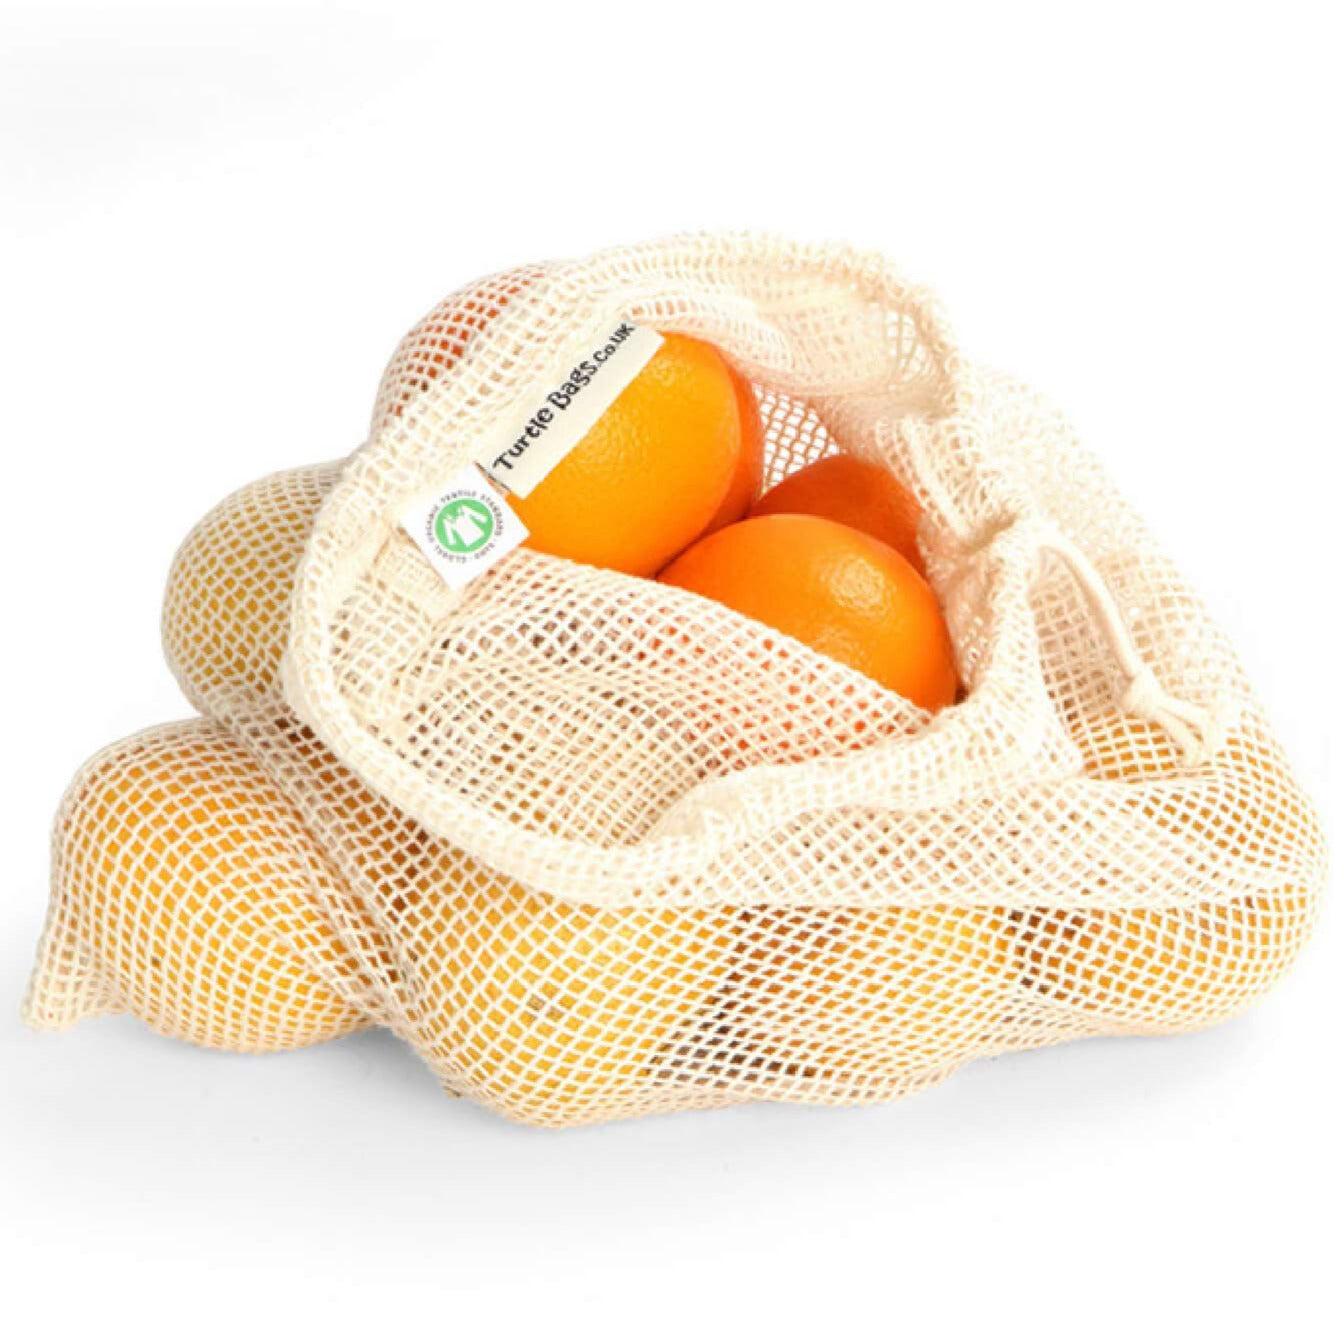 Large bulk produce bag with oranges inside